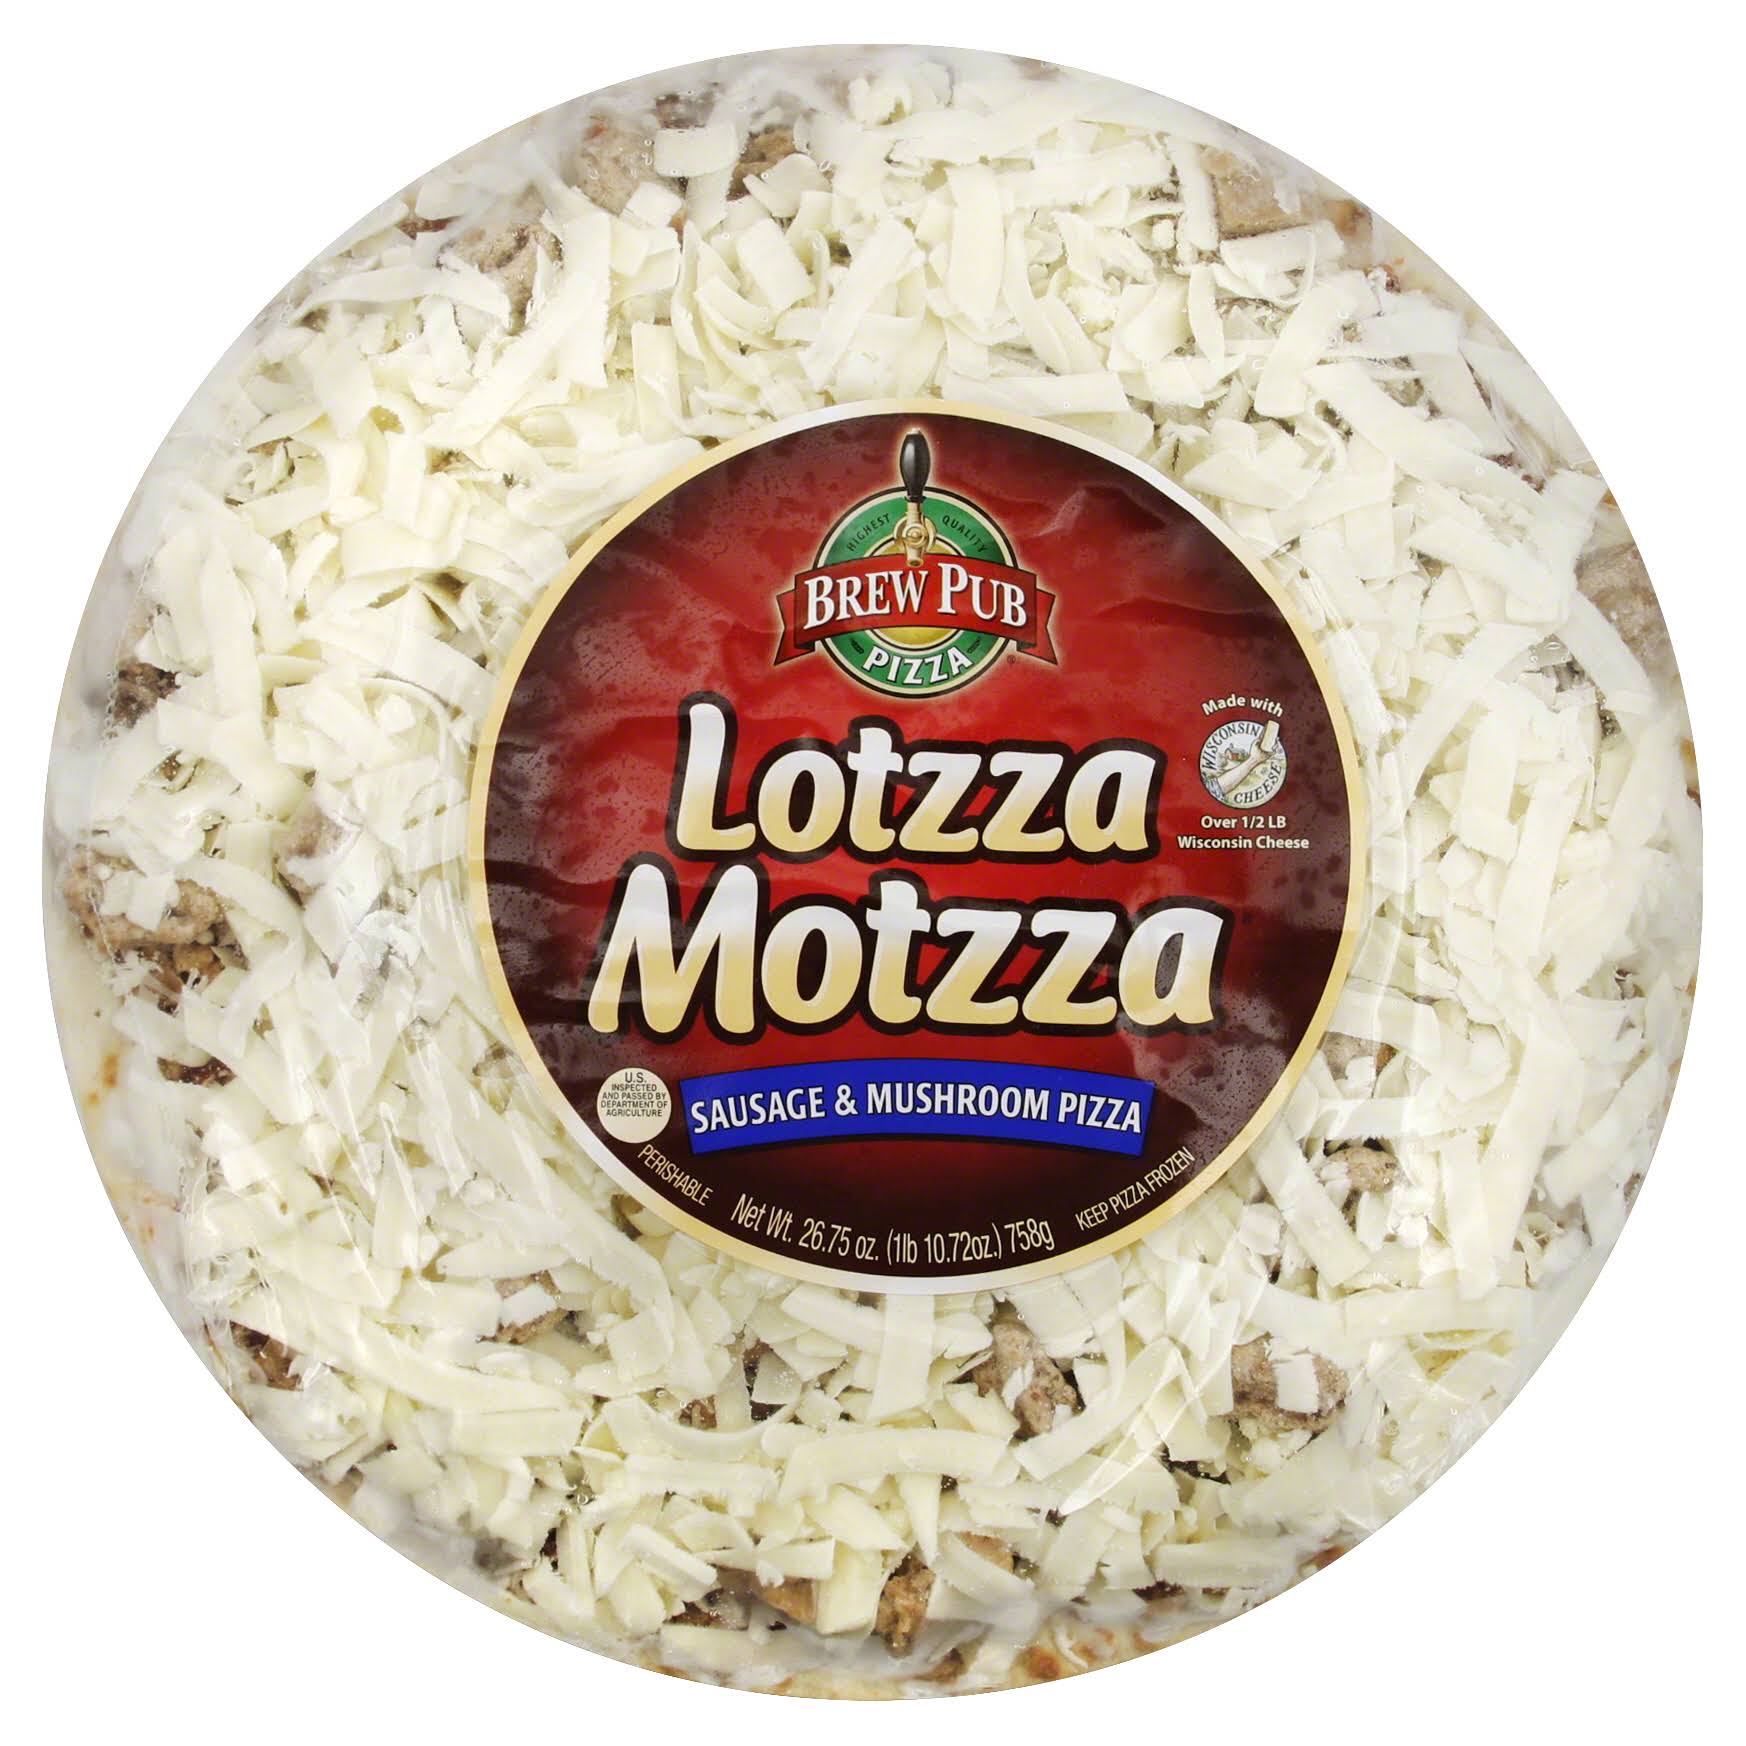 Brew Pub Lotzza Motzza Pizza, 12-Inch, Sausage & Mushroom Pizza - 26.75 oz